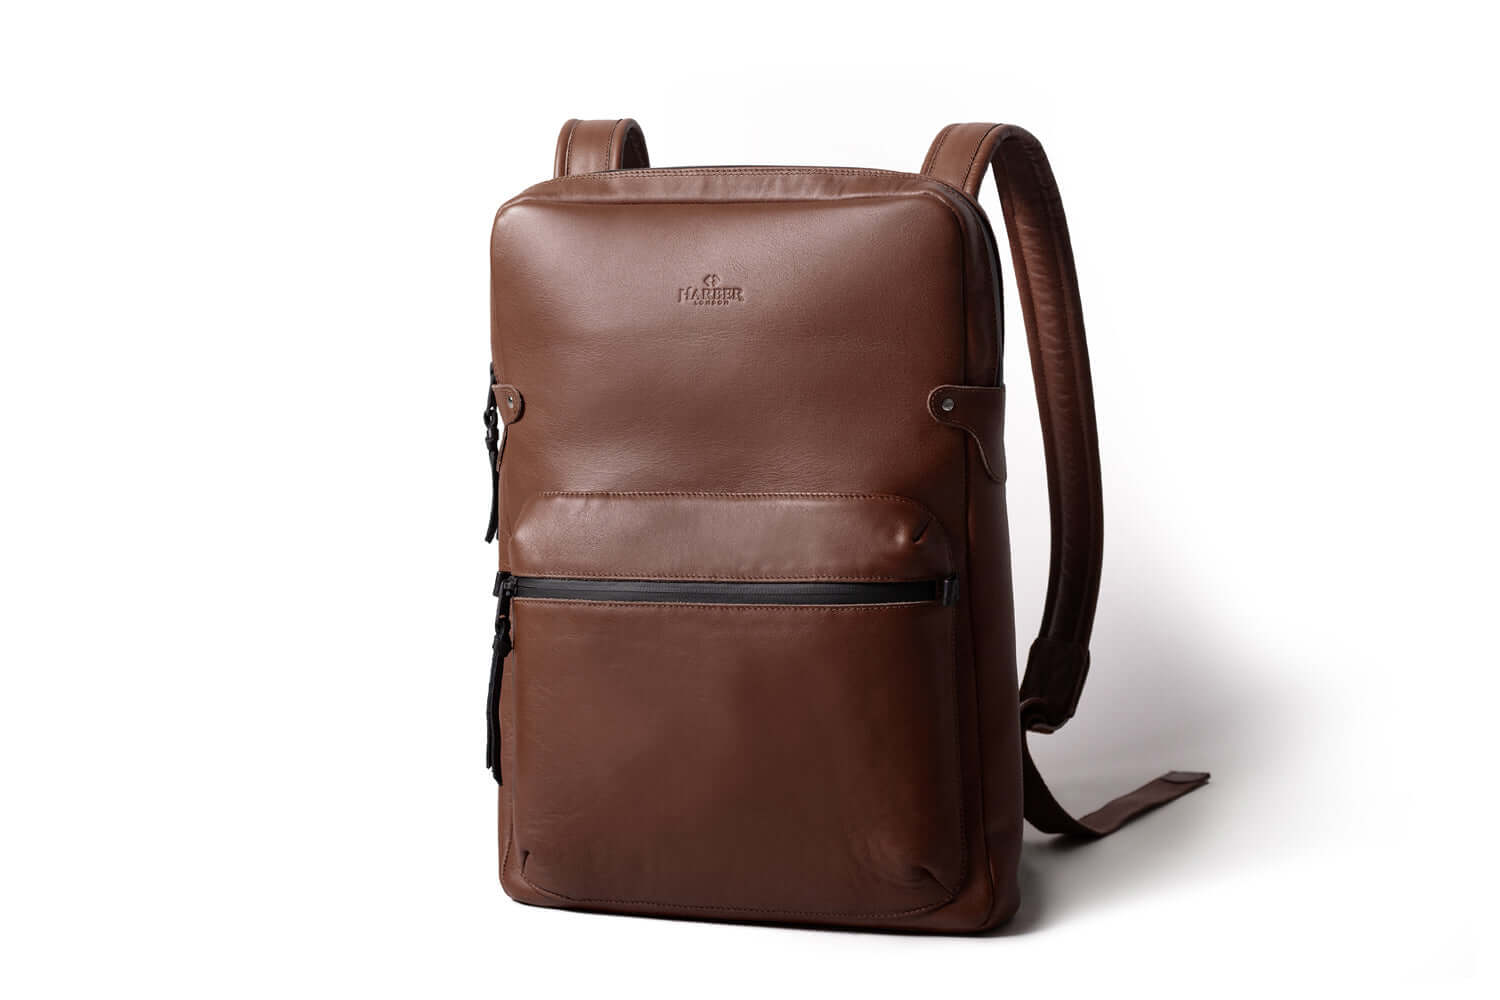 NEW! NWT MICHAEL KORS Dallas Medium Slim Leather Backpack Luggage Brown |  eBay